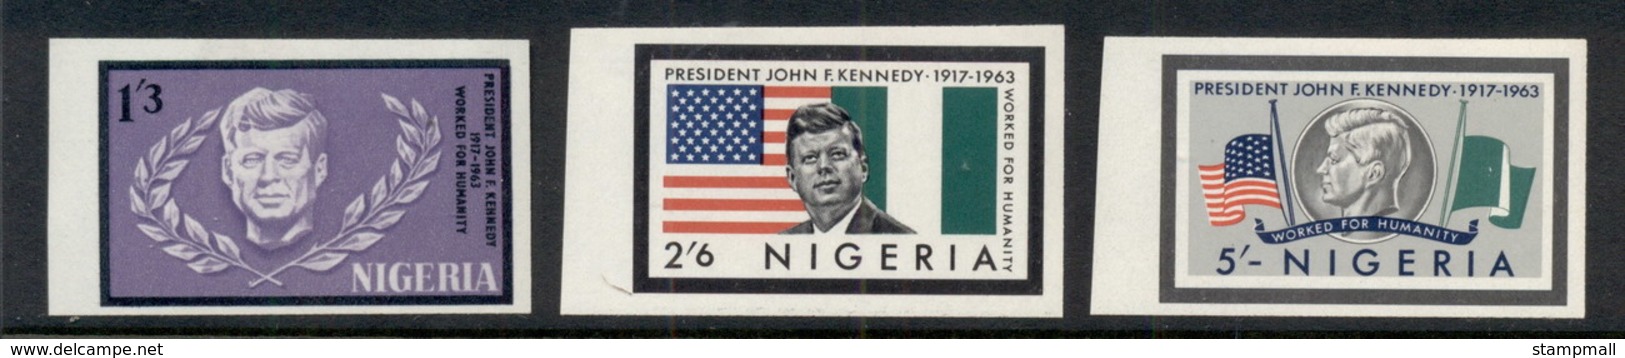 Nigeria 1964 JFK Kennedy IMPERF MLH - Nigeria (1961-...)